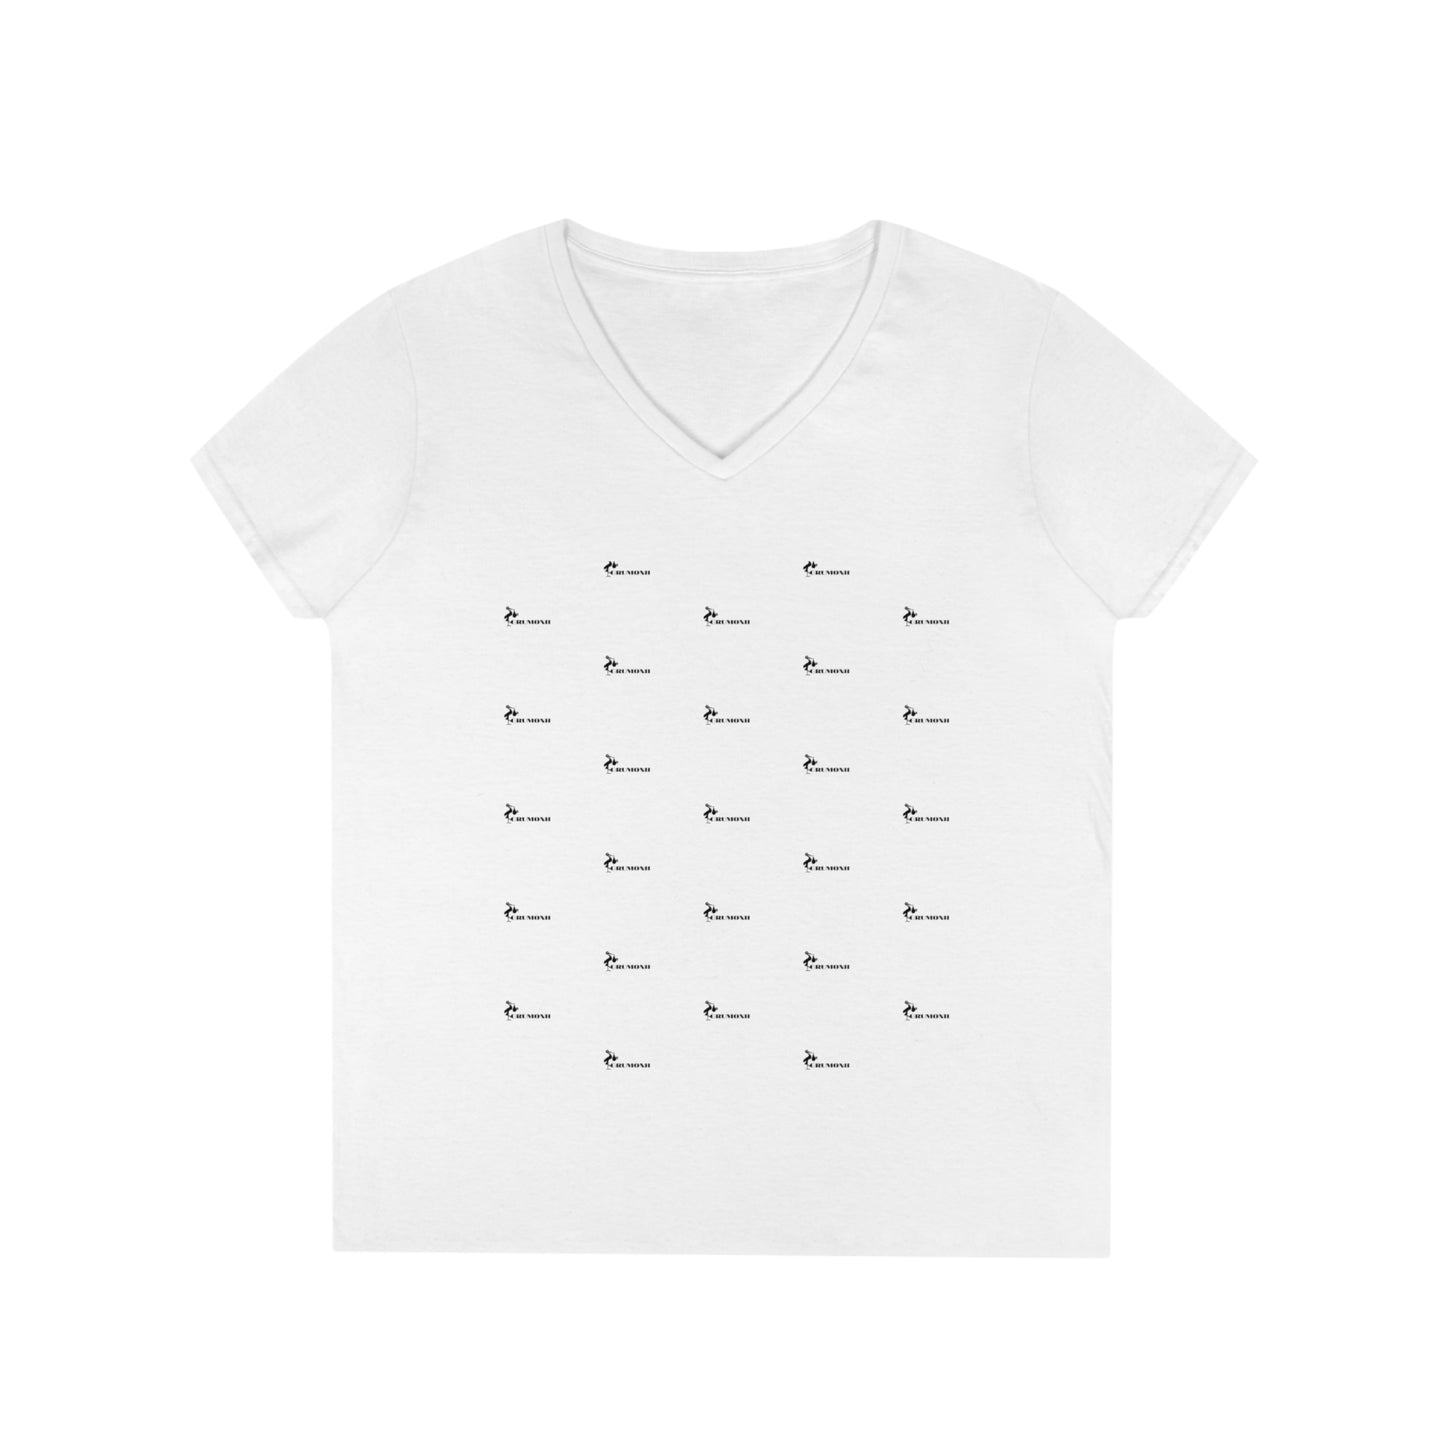 GRUMONH Women’s V-Neck T-Shirt